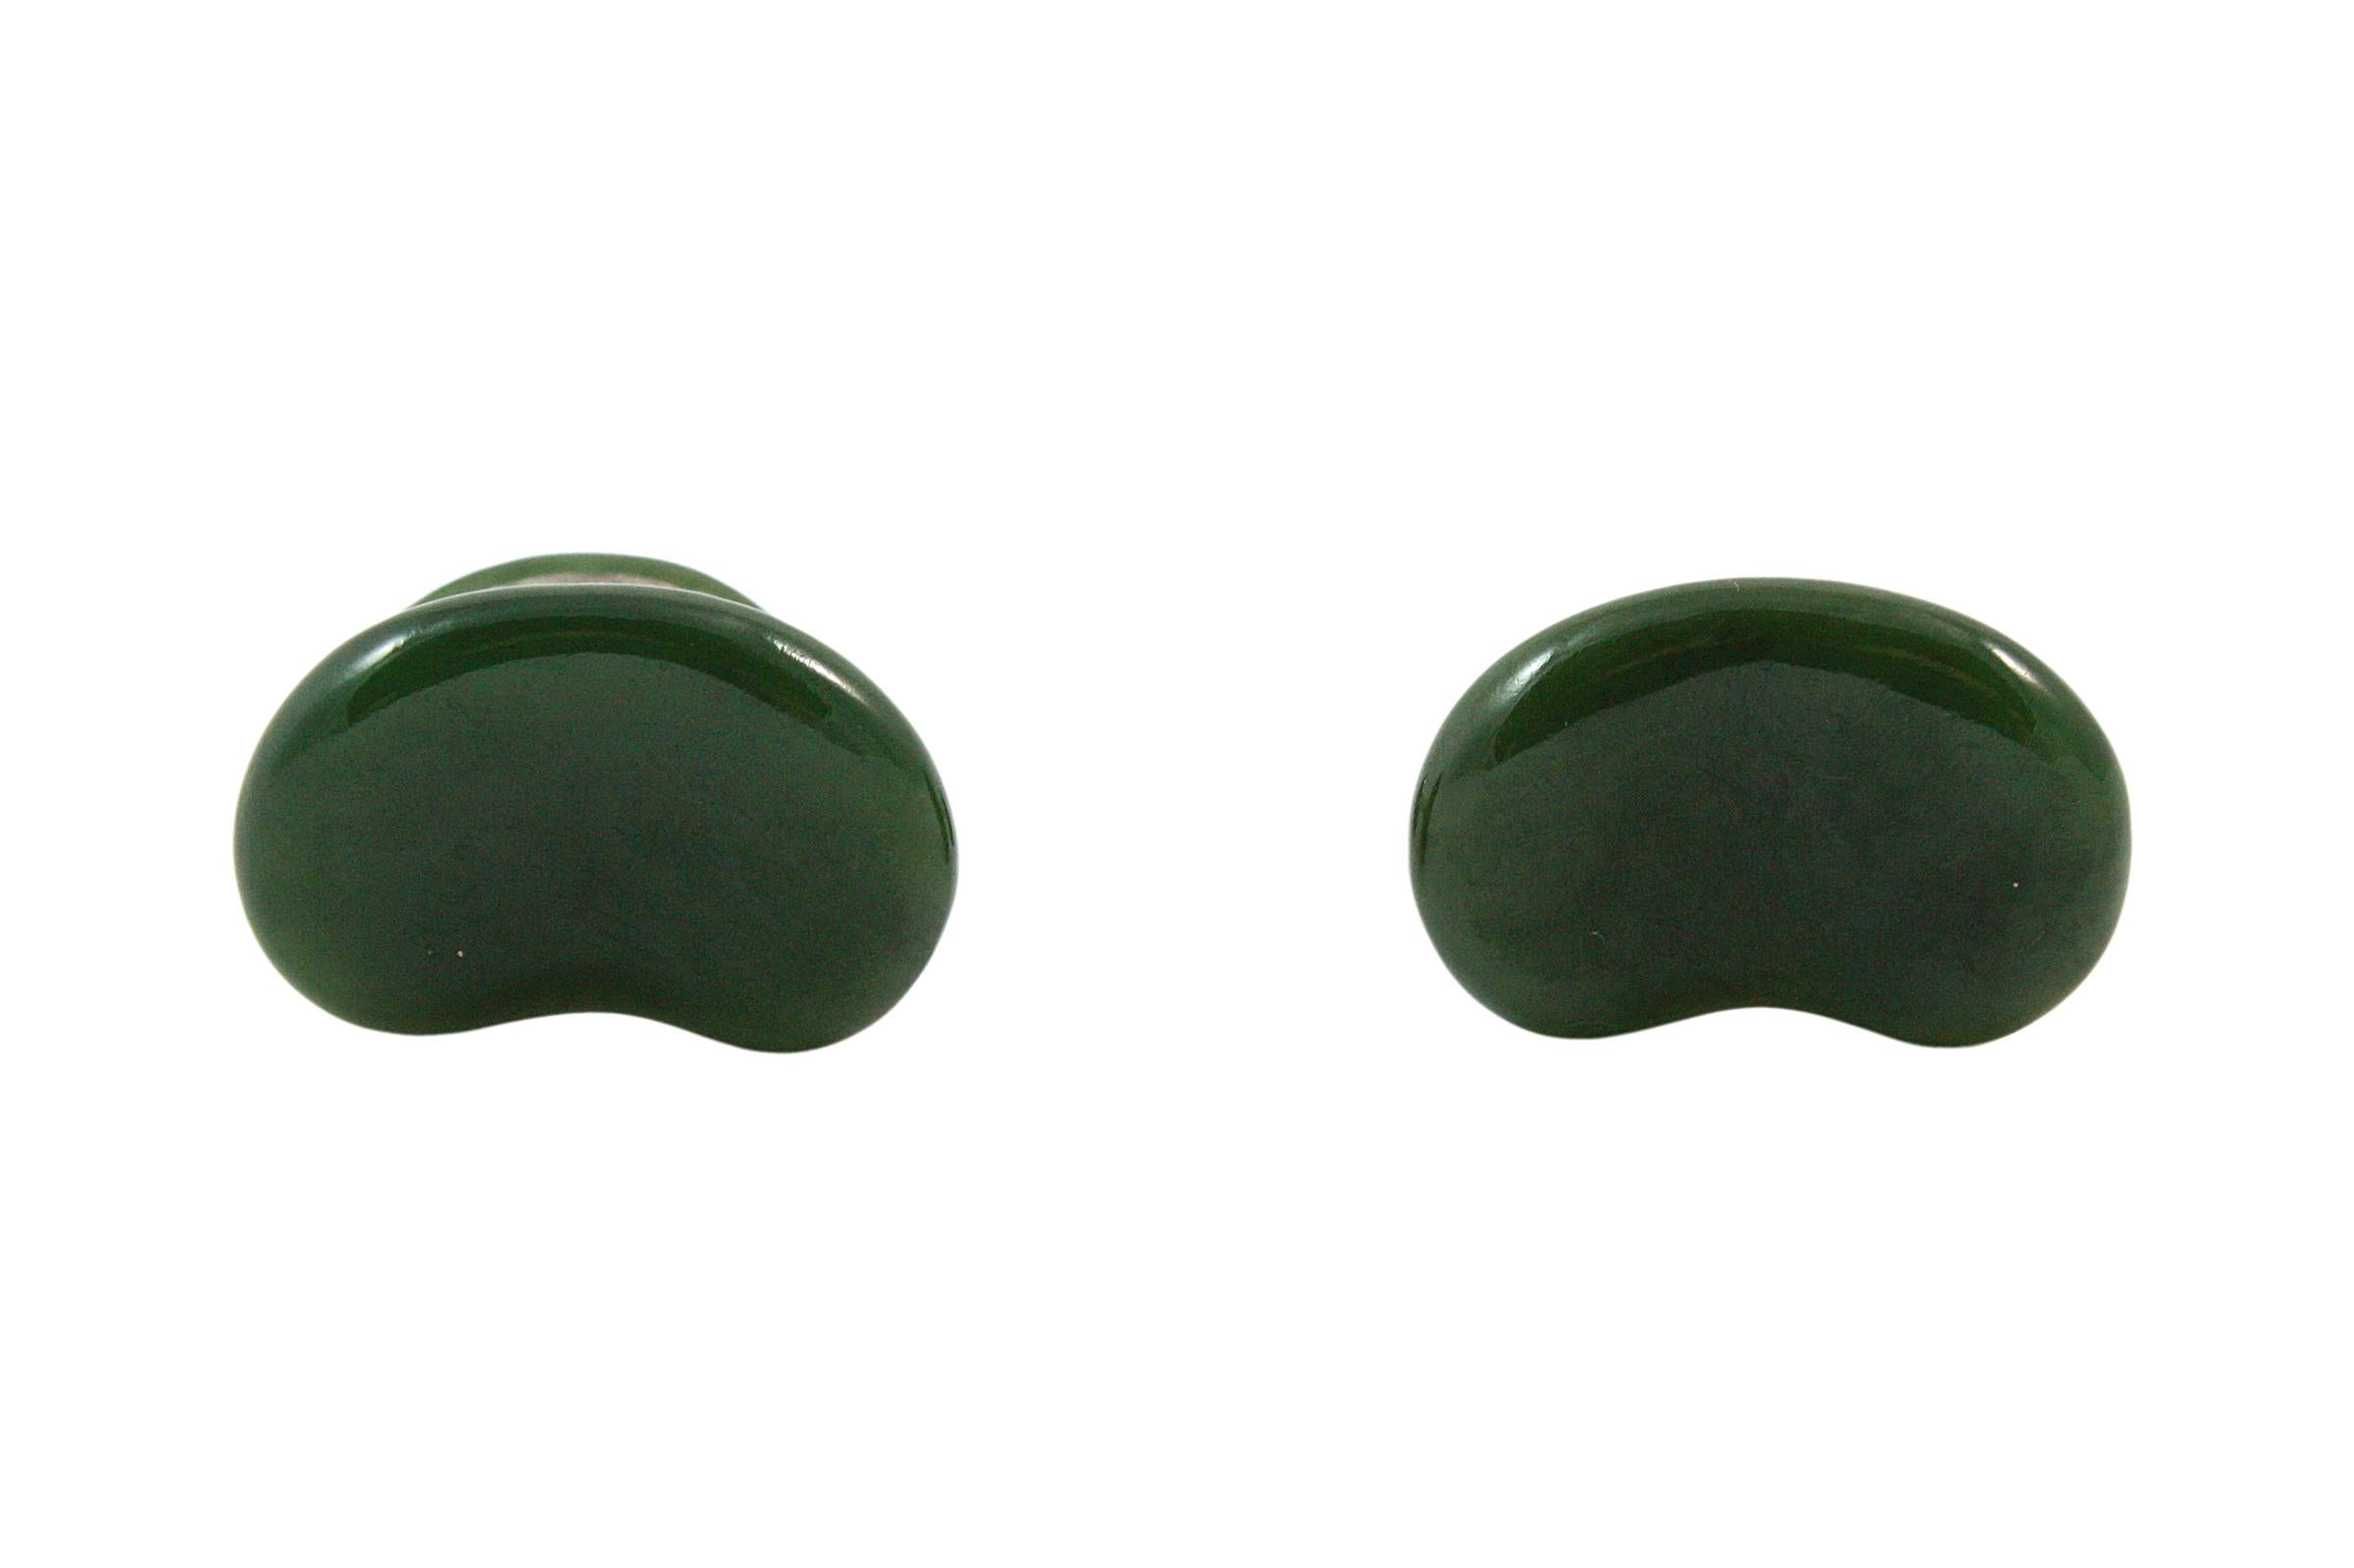 Green Jade and Sterling Silver
Oval Bean shape 
Tiffany & Co. Elsa Peretti 
